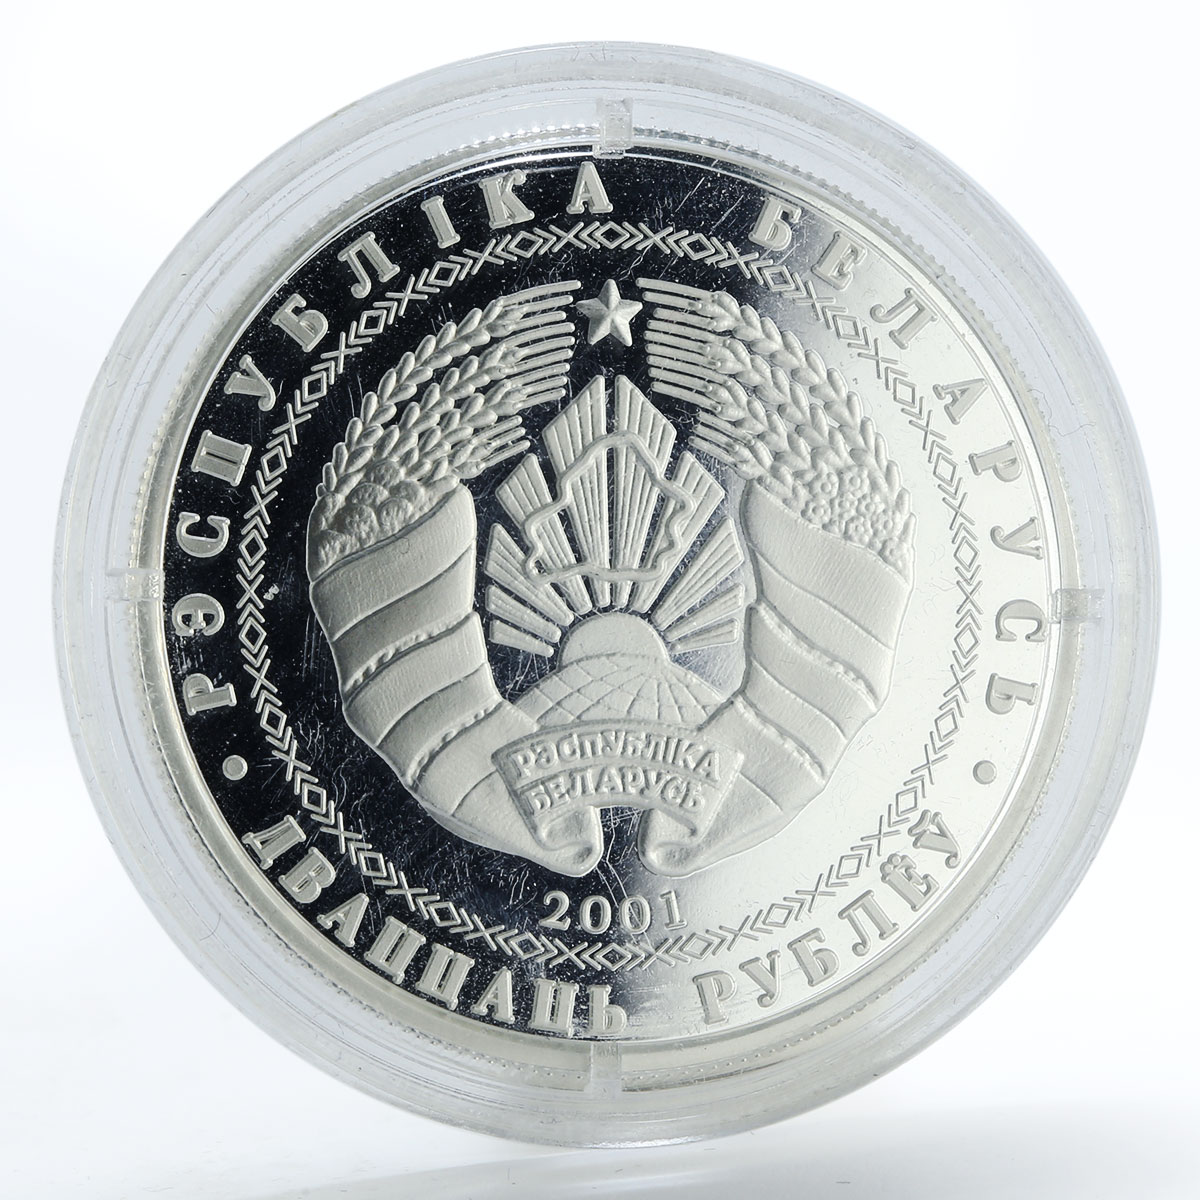 Belarus 20 rubles Winter Olympics Biathlon proof silver coin 2001